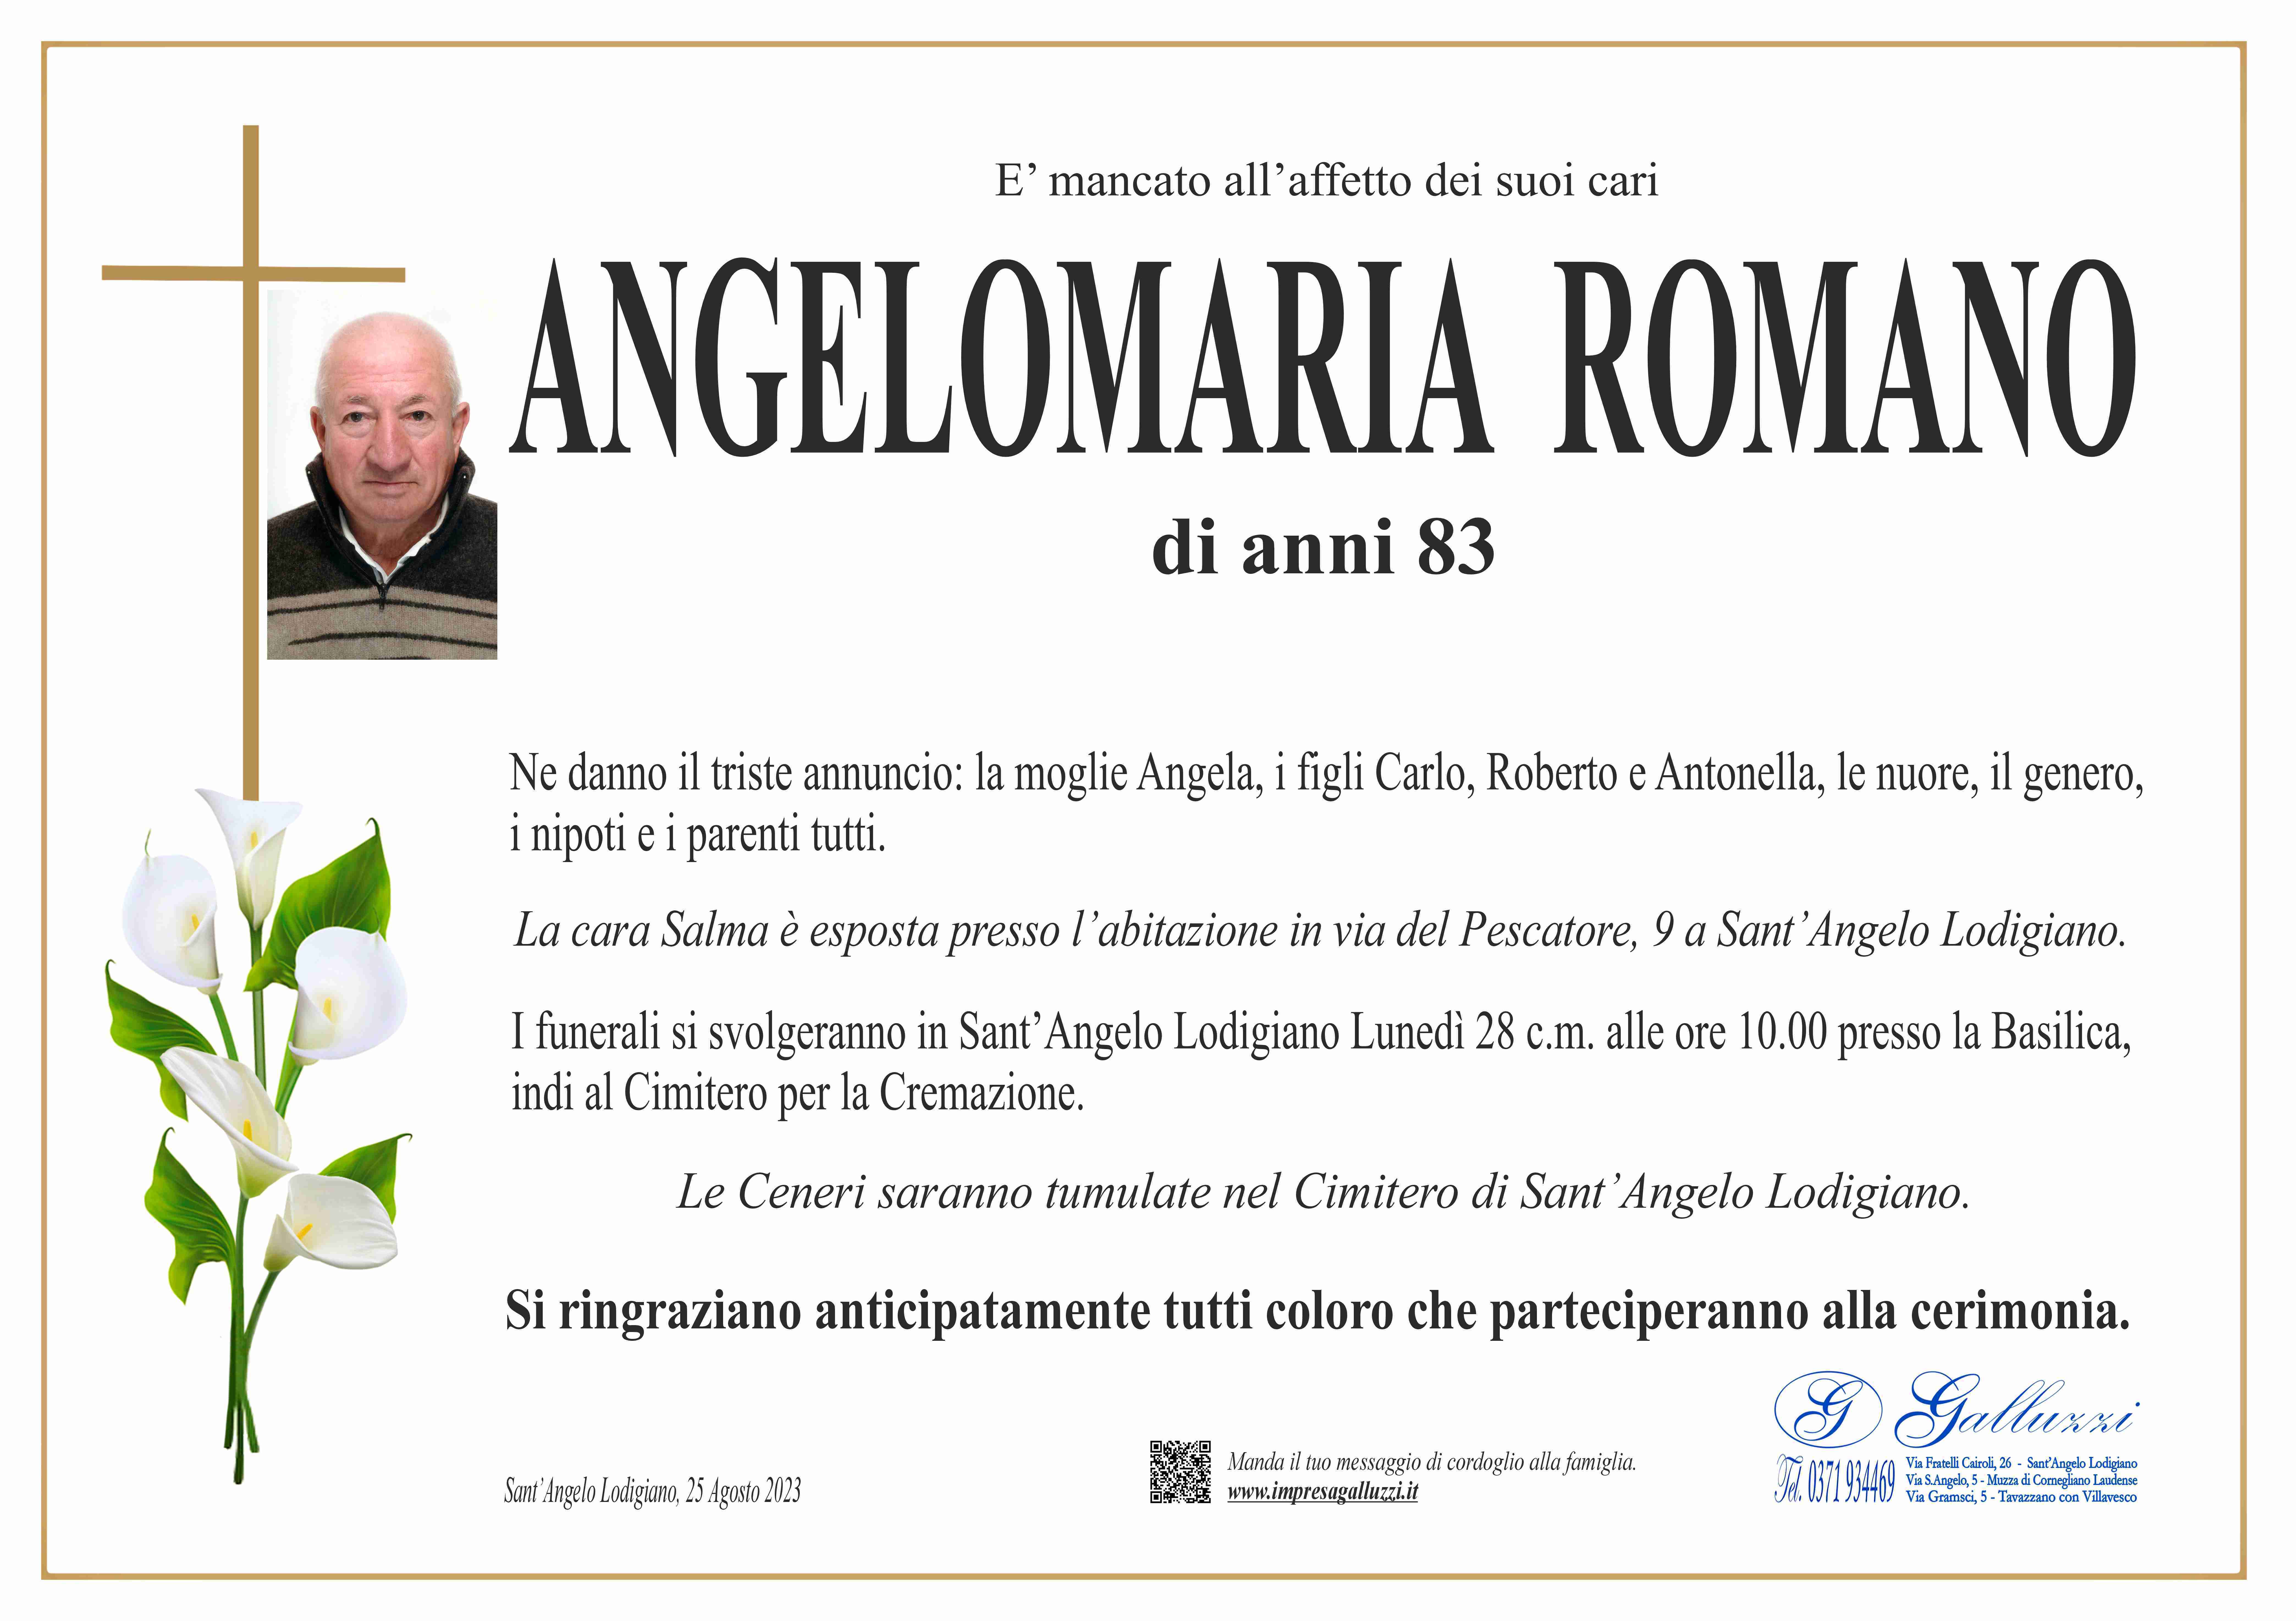 Angelomaria Romano